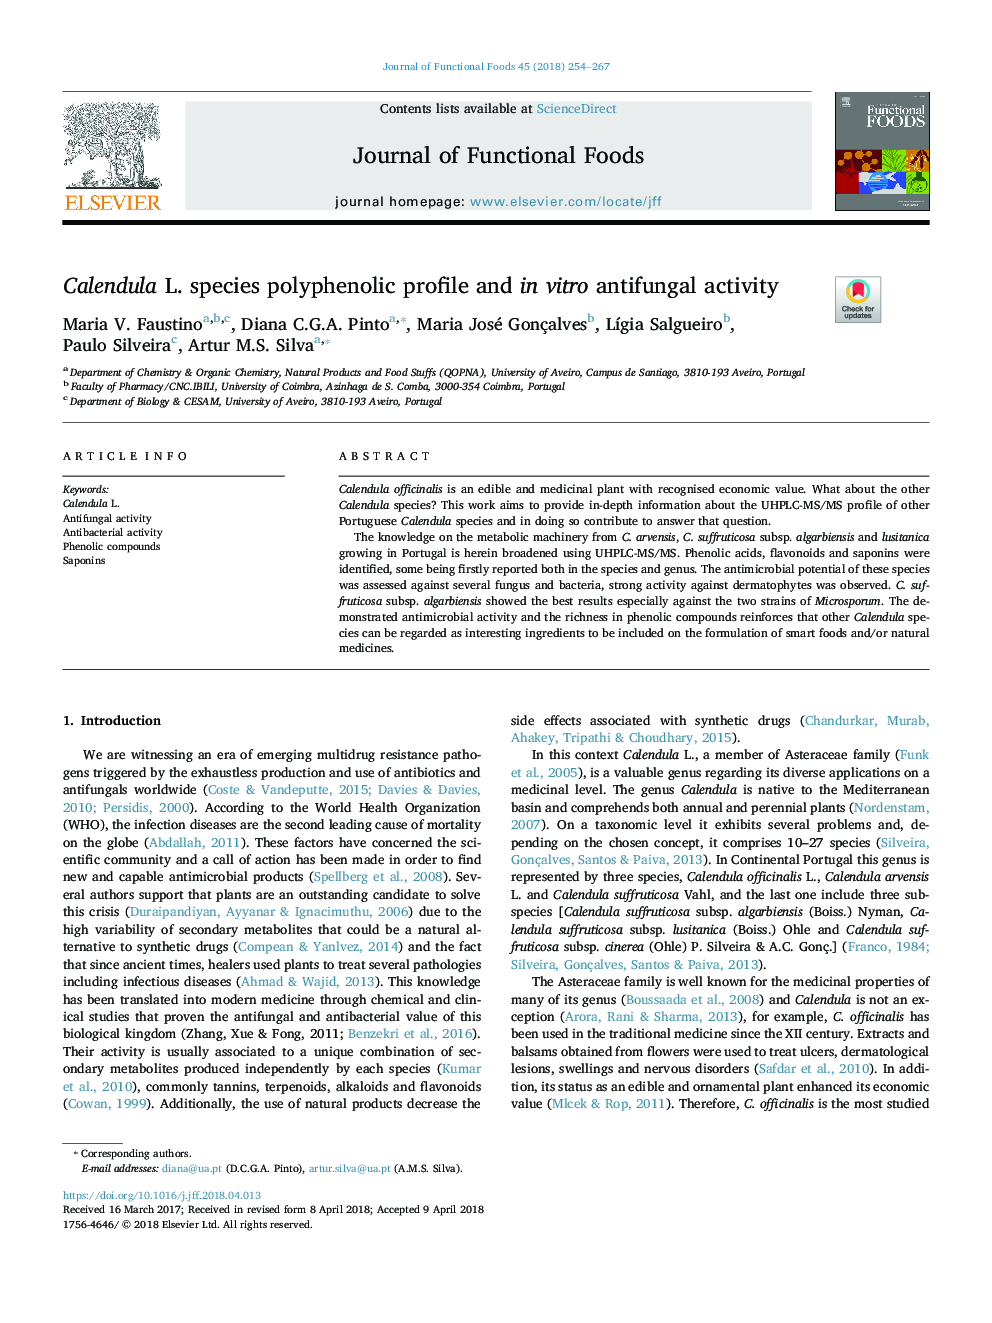 Calendula L. species polyphenolic profile and in vitro antifungal activity